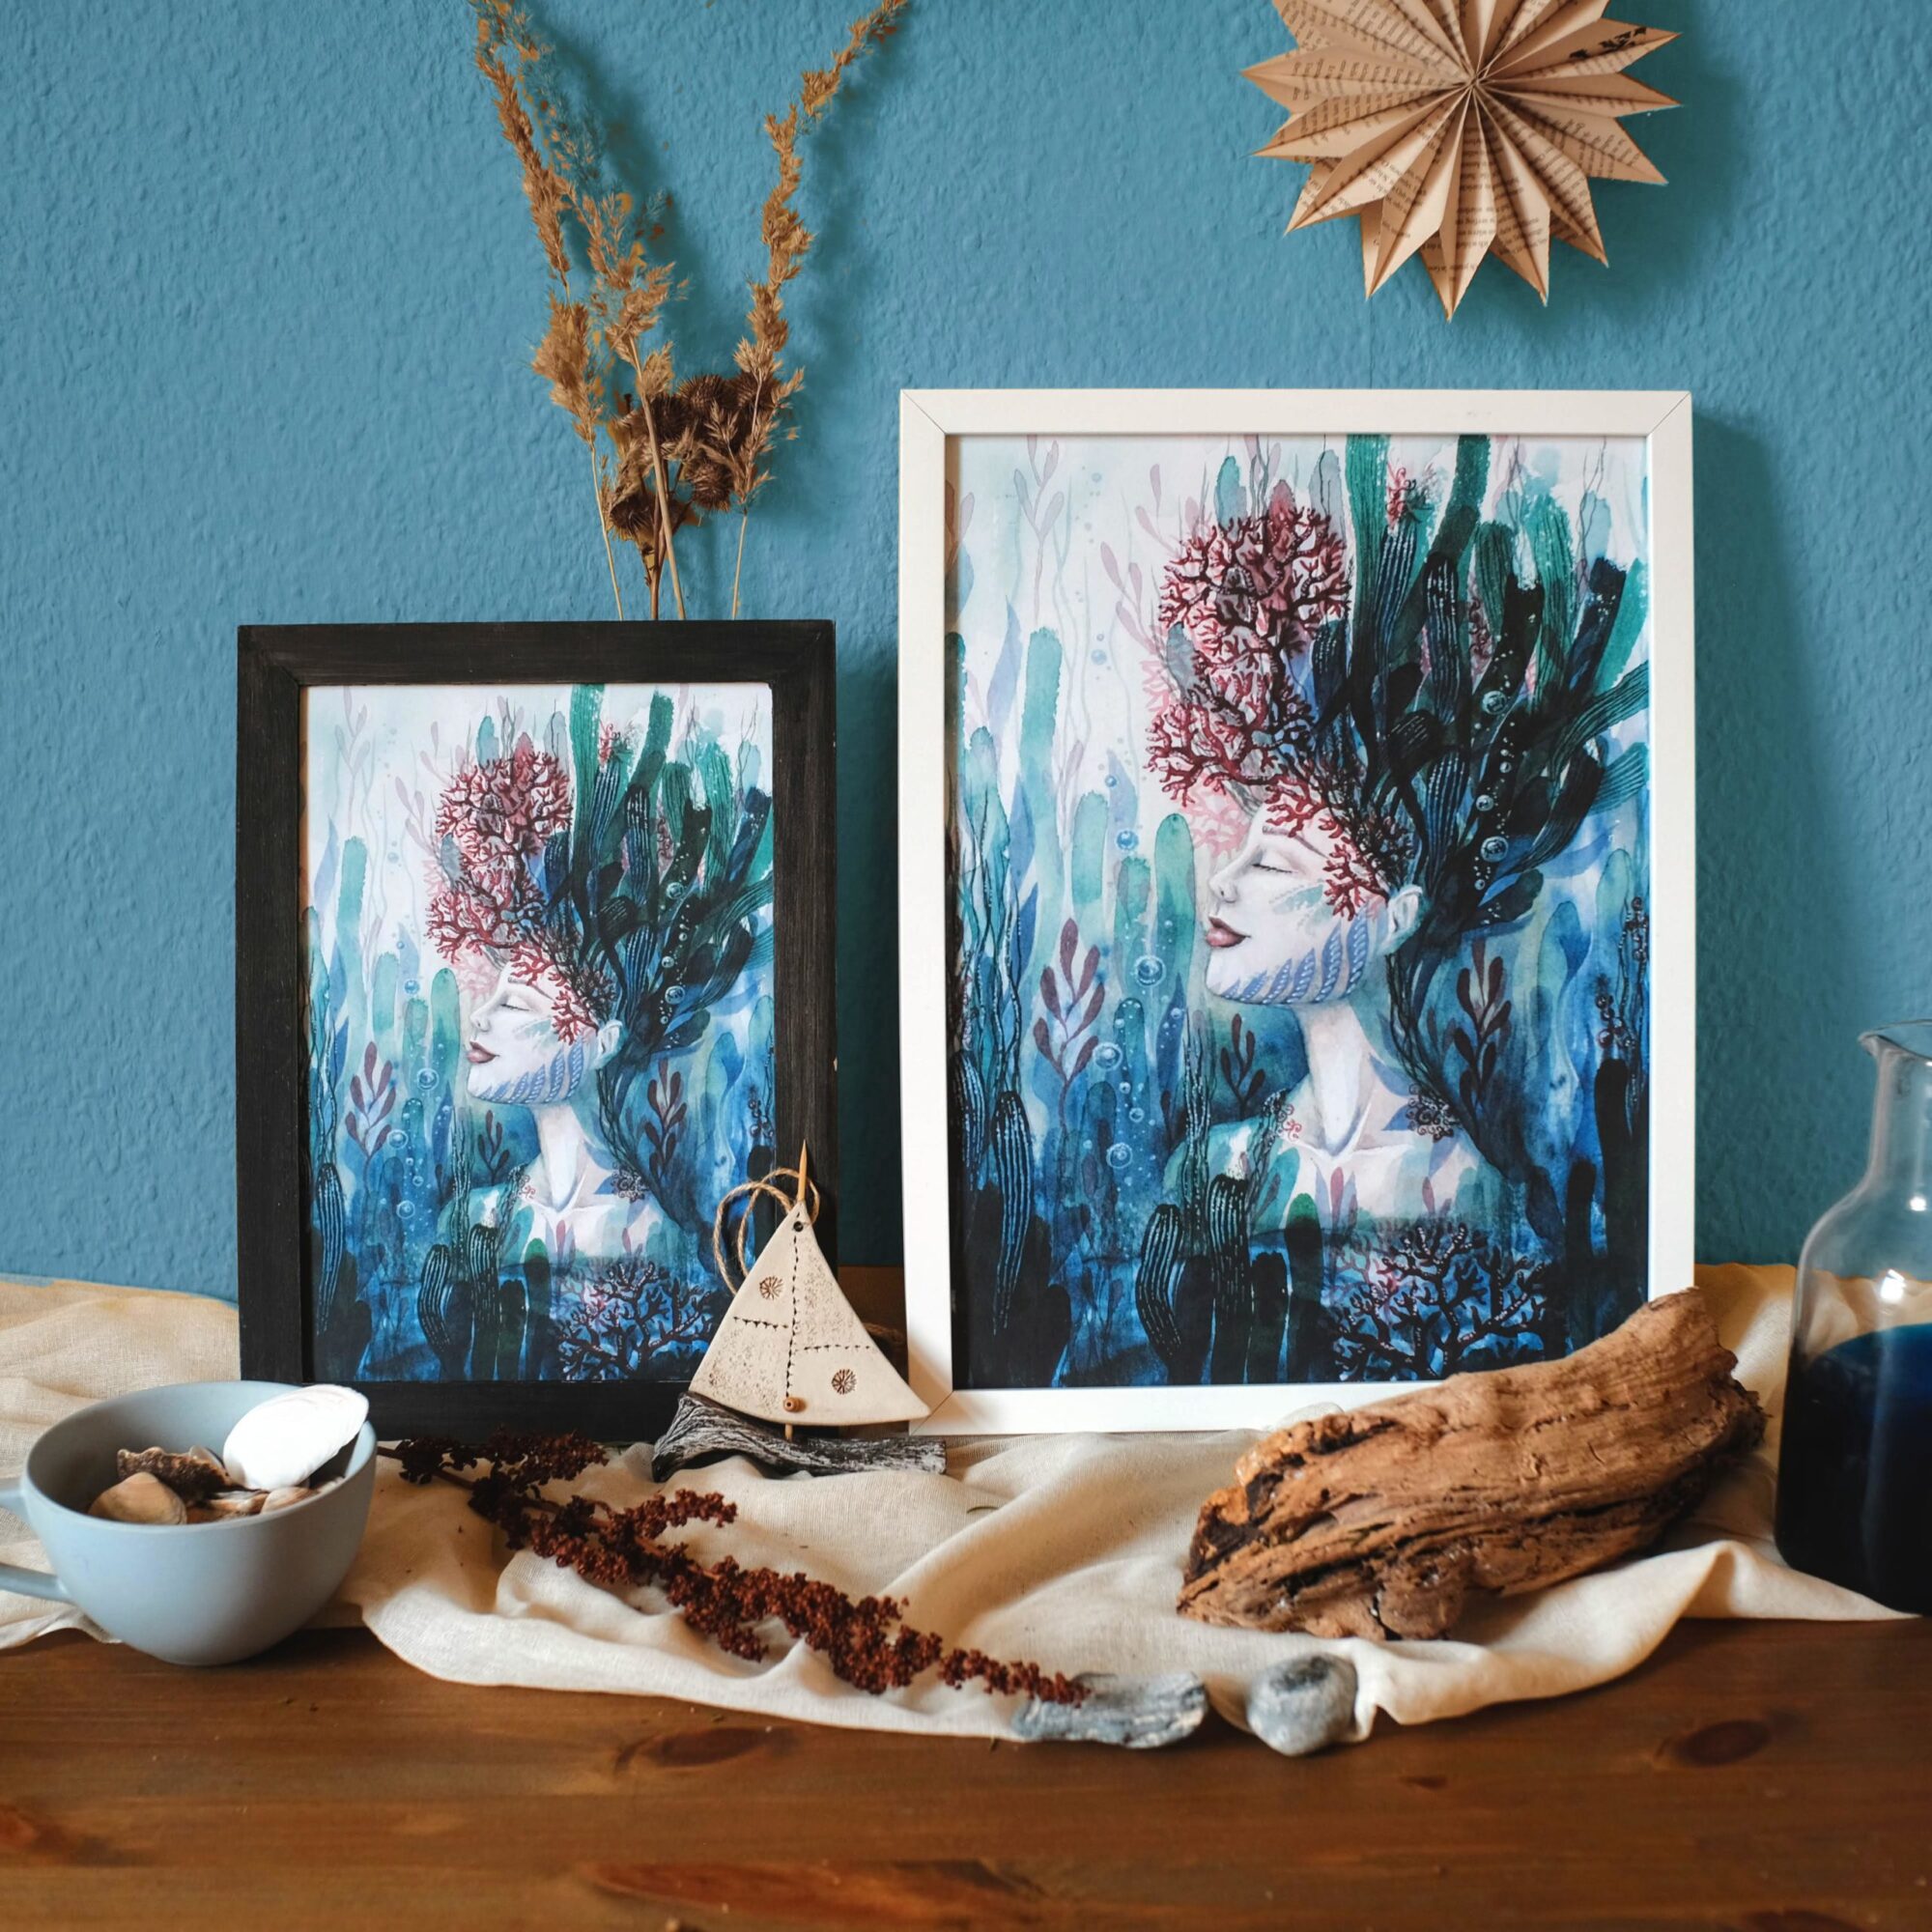 Korallenbluete maria und der pinsel aquarell malerei oeko artprint meer boho blueten goettin fantasie mermaid ozean1 160 60 scaled - Maria und der Pinsel